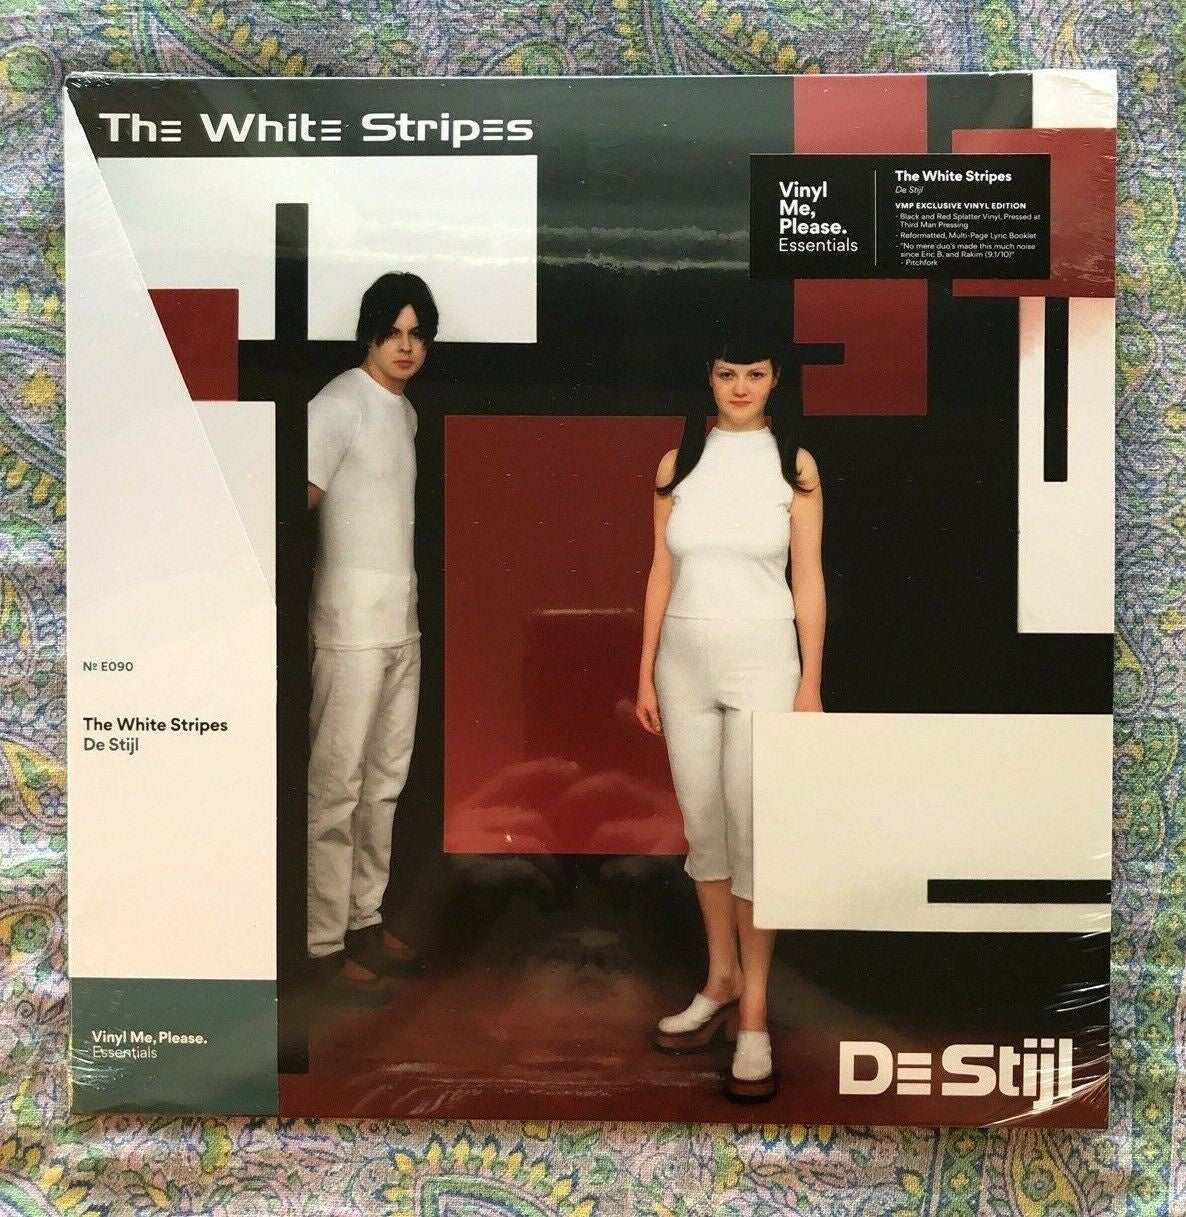 The White Stripes – De Stijl (2000) - New LP Record 2020 Vinyl Me, Please Third Man Red w/ Black Splatter Vinyl - Alternative Rock / Garage Rock